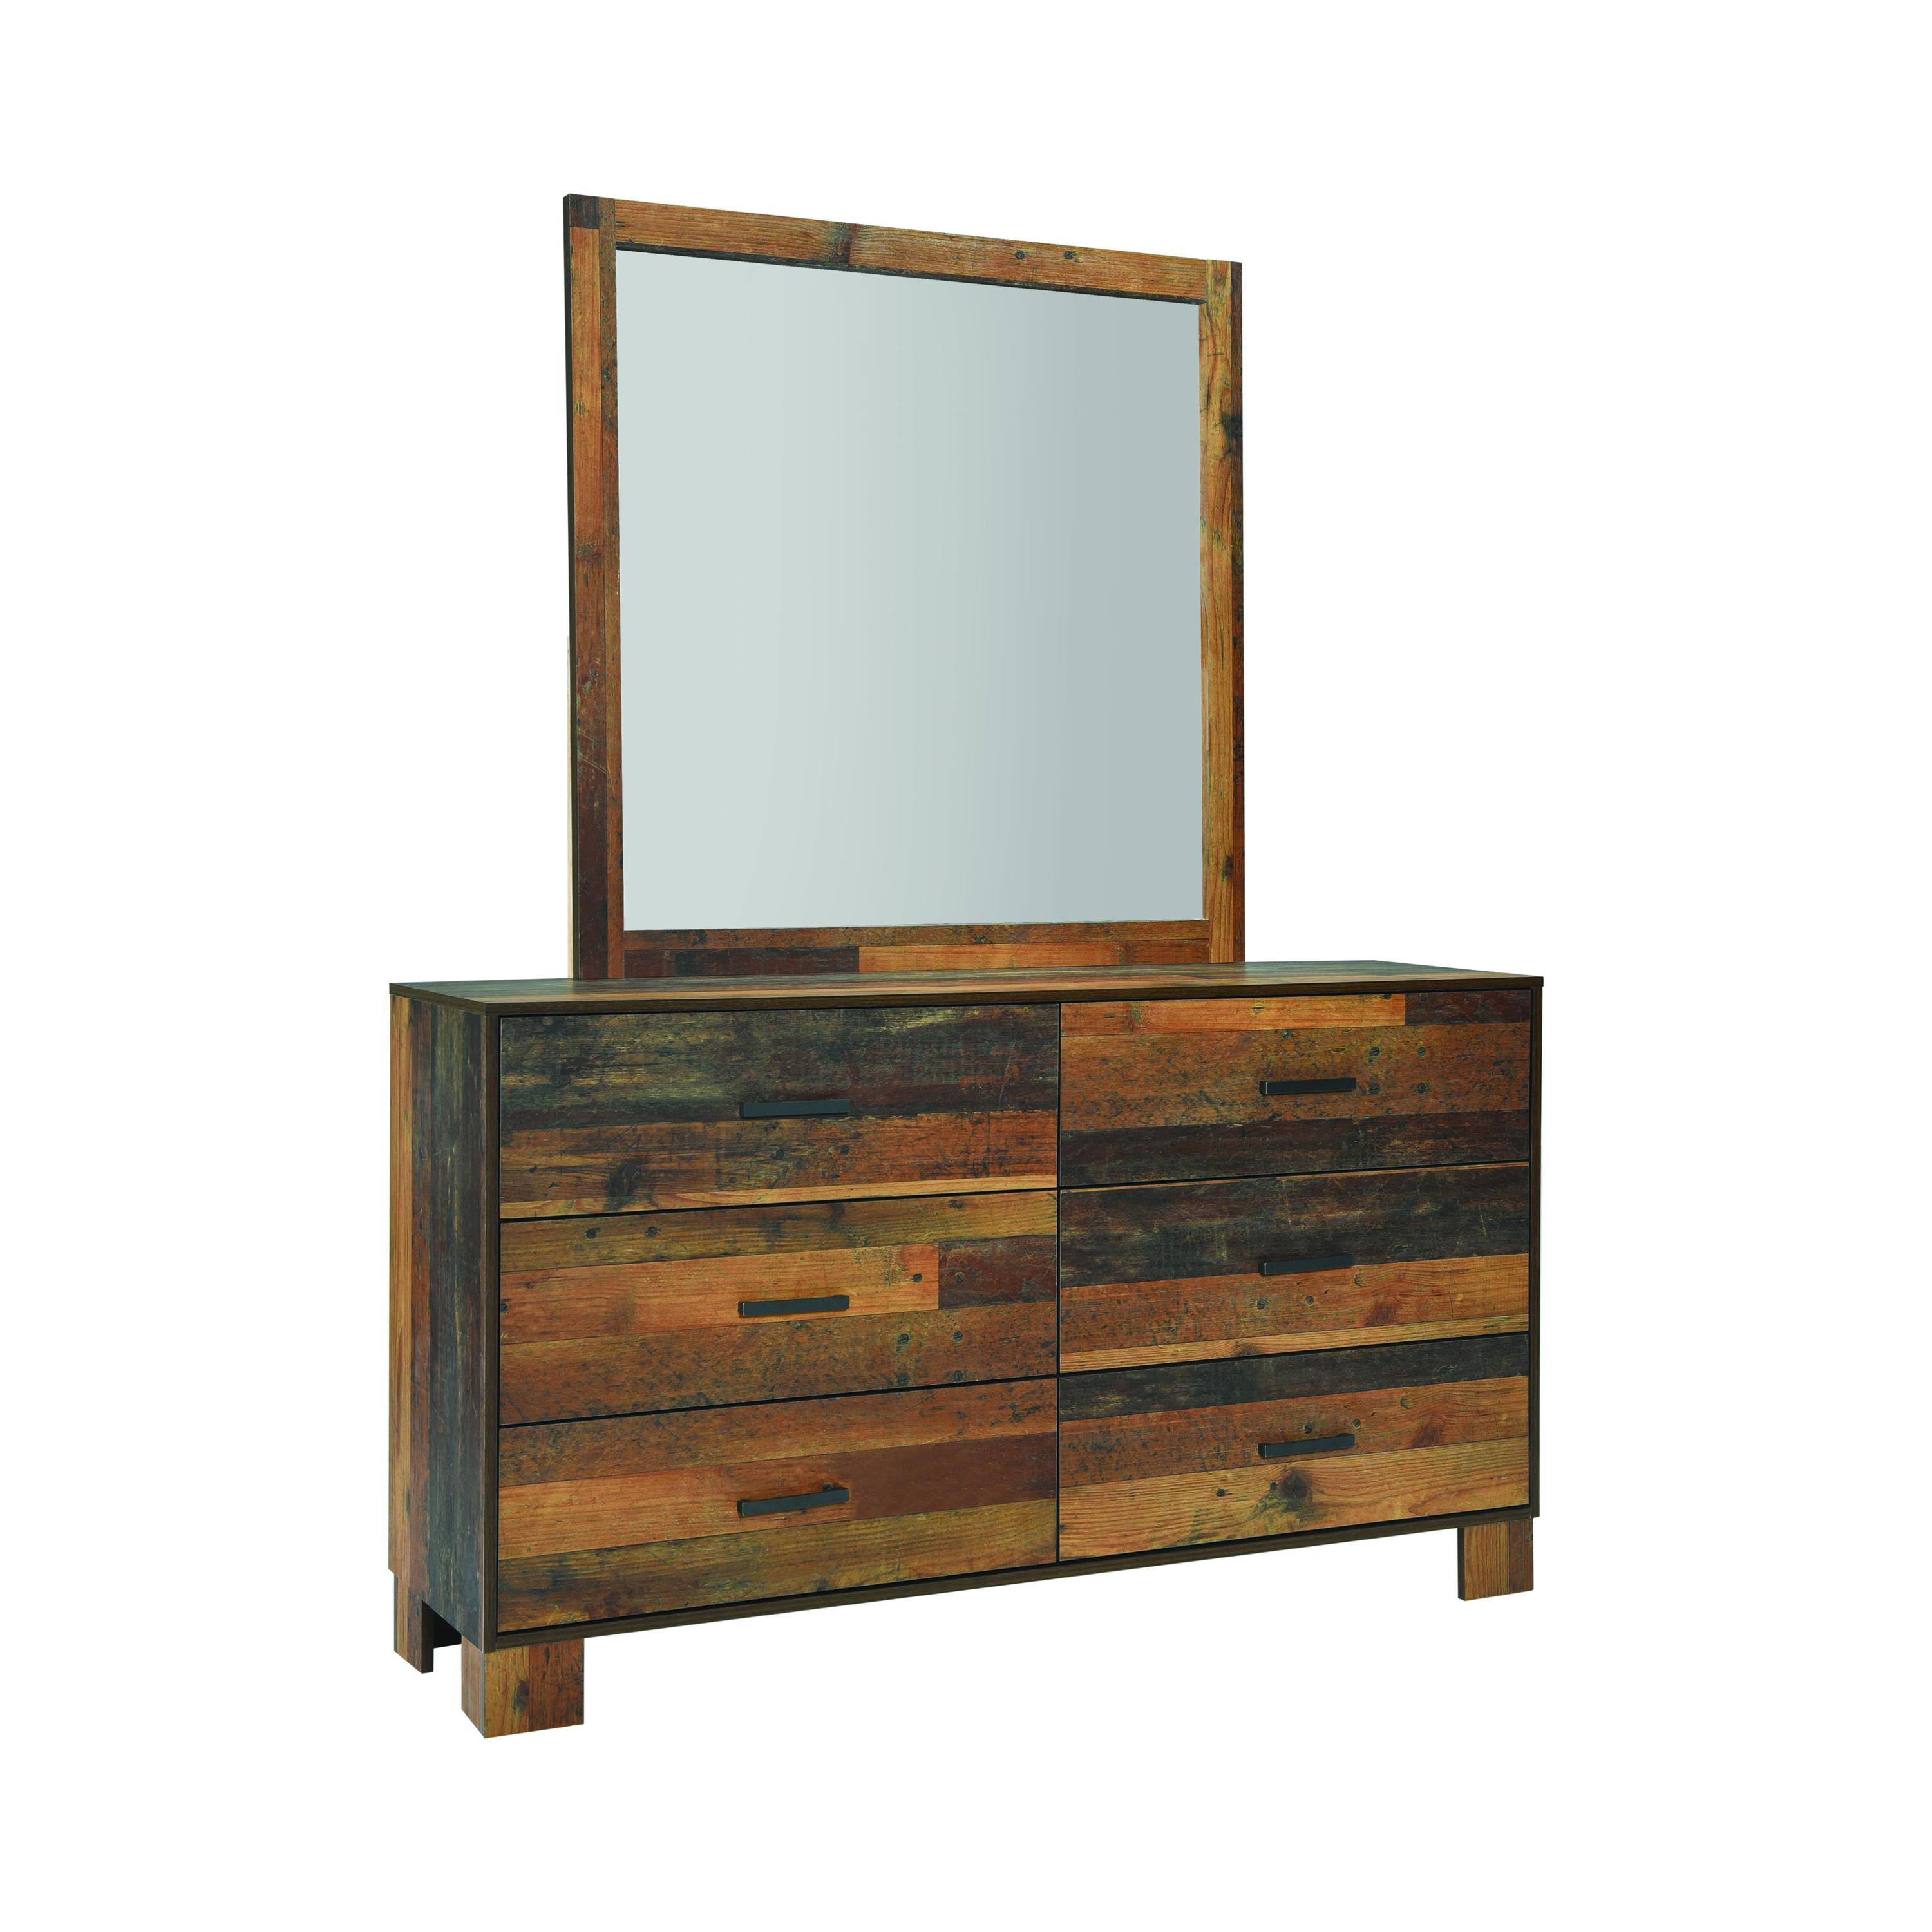 Rustic Dresser w/Mirror 223143-S2 Sidney 223143-S2 in Brown 